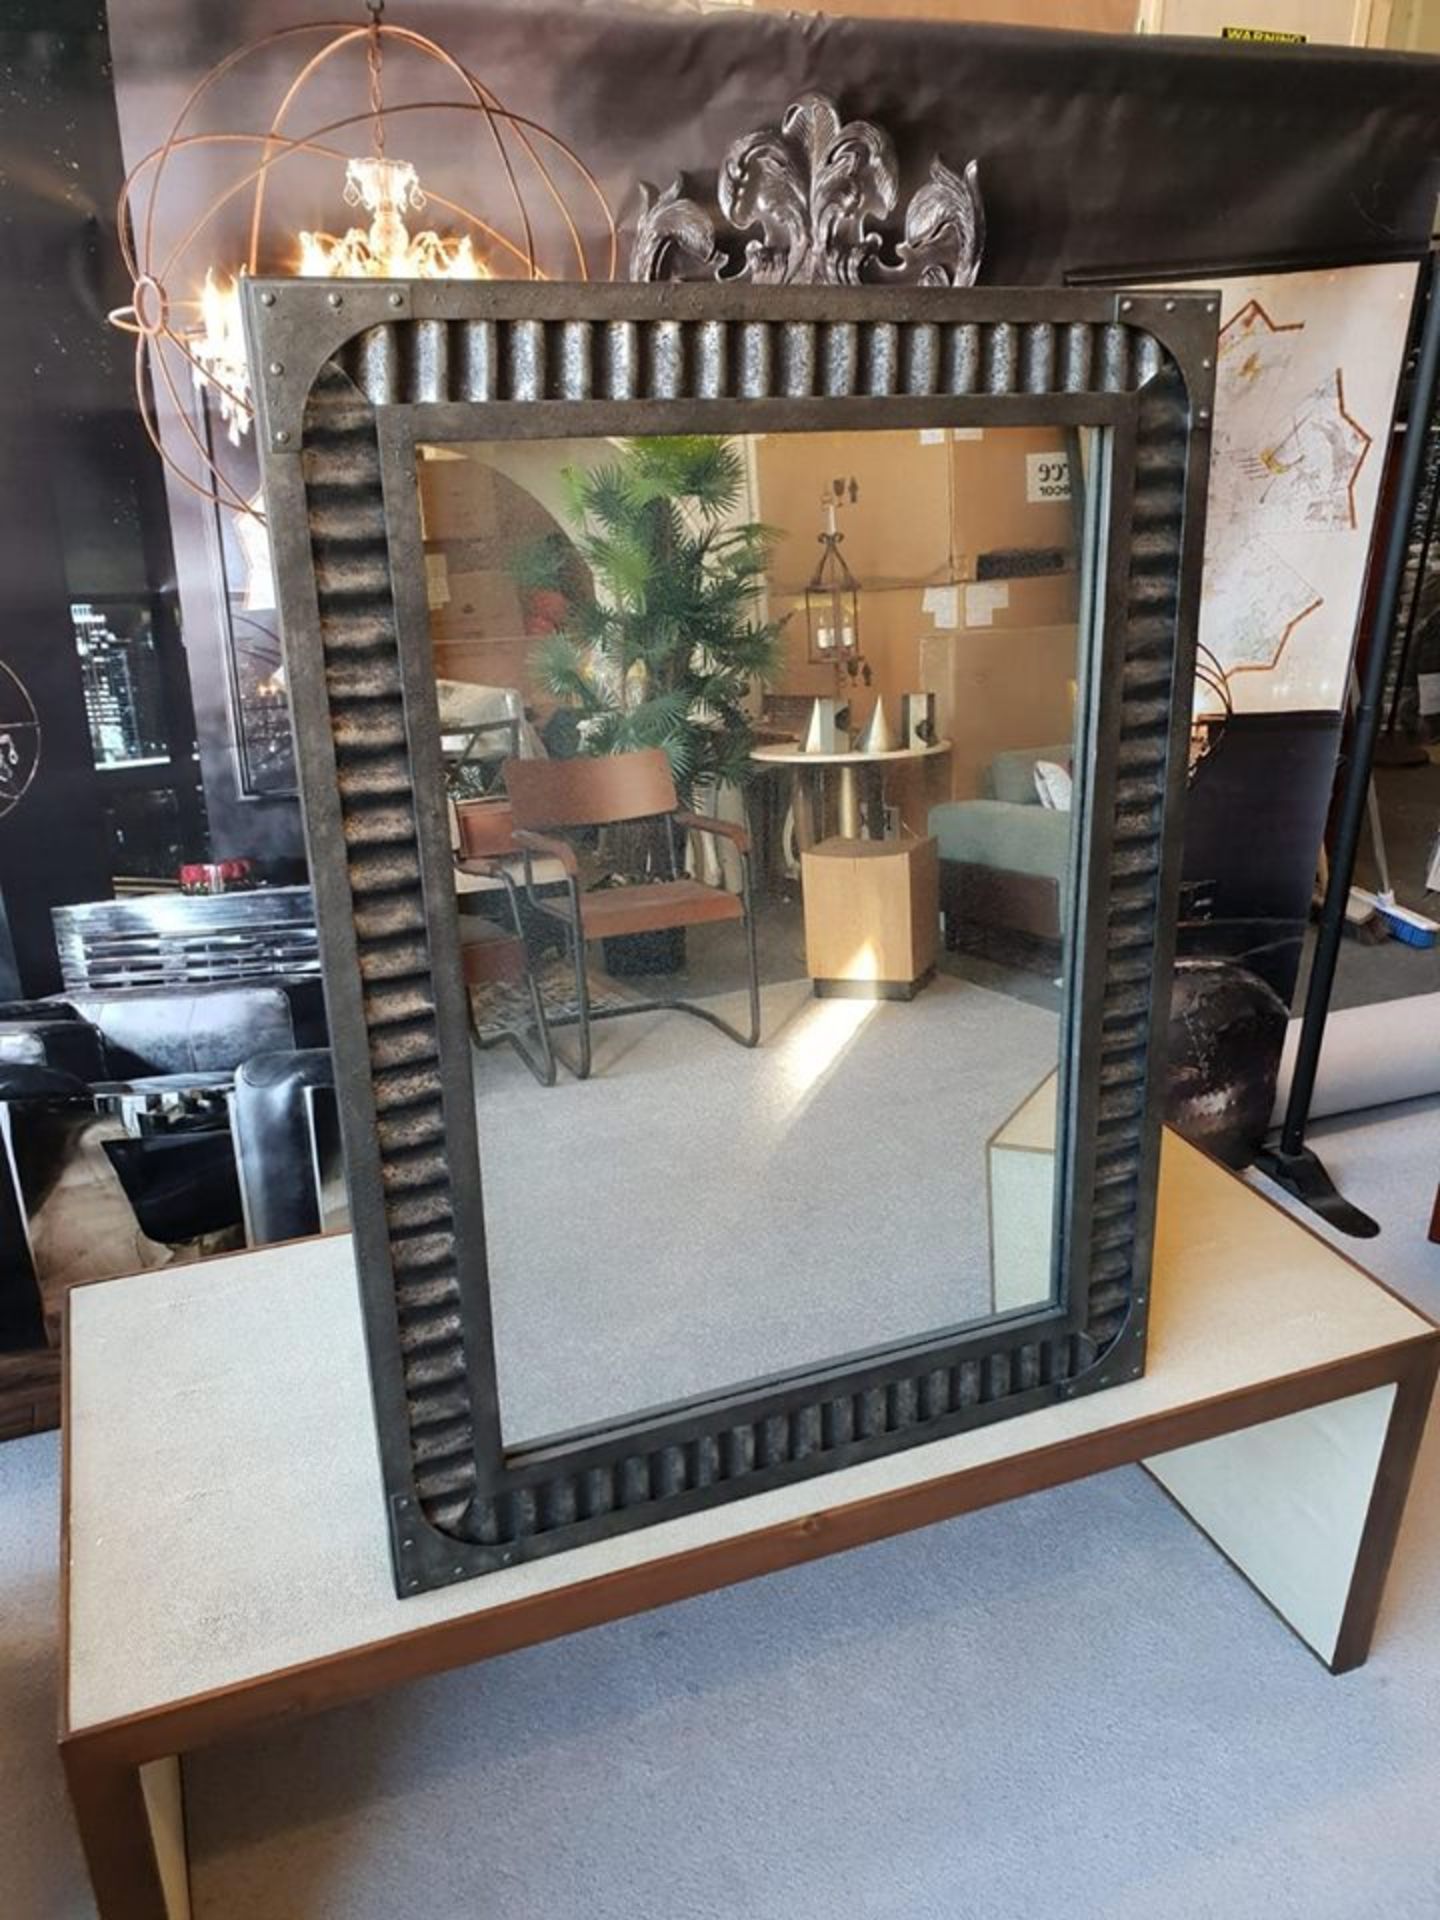 Jawa Rectangular Medium Wall Mirror Iron Frame With Corrugated Sheet Metal And Antiqued Mirror Plate - Image 2 of 2